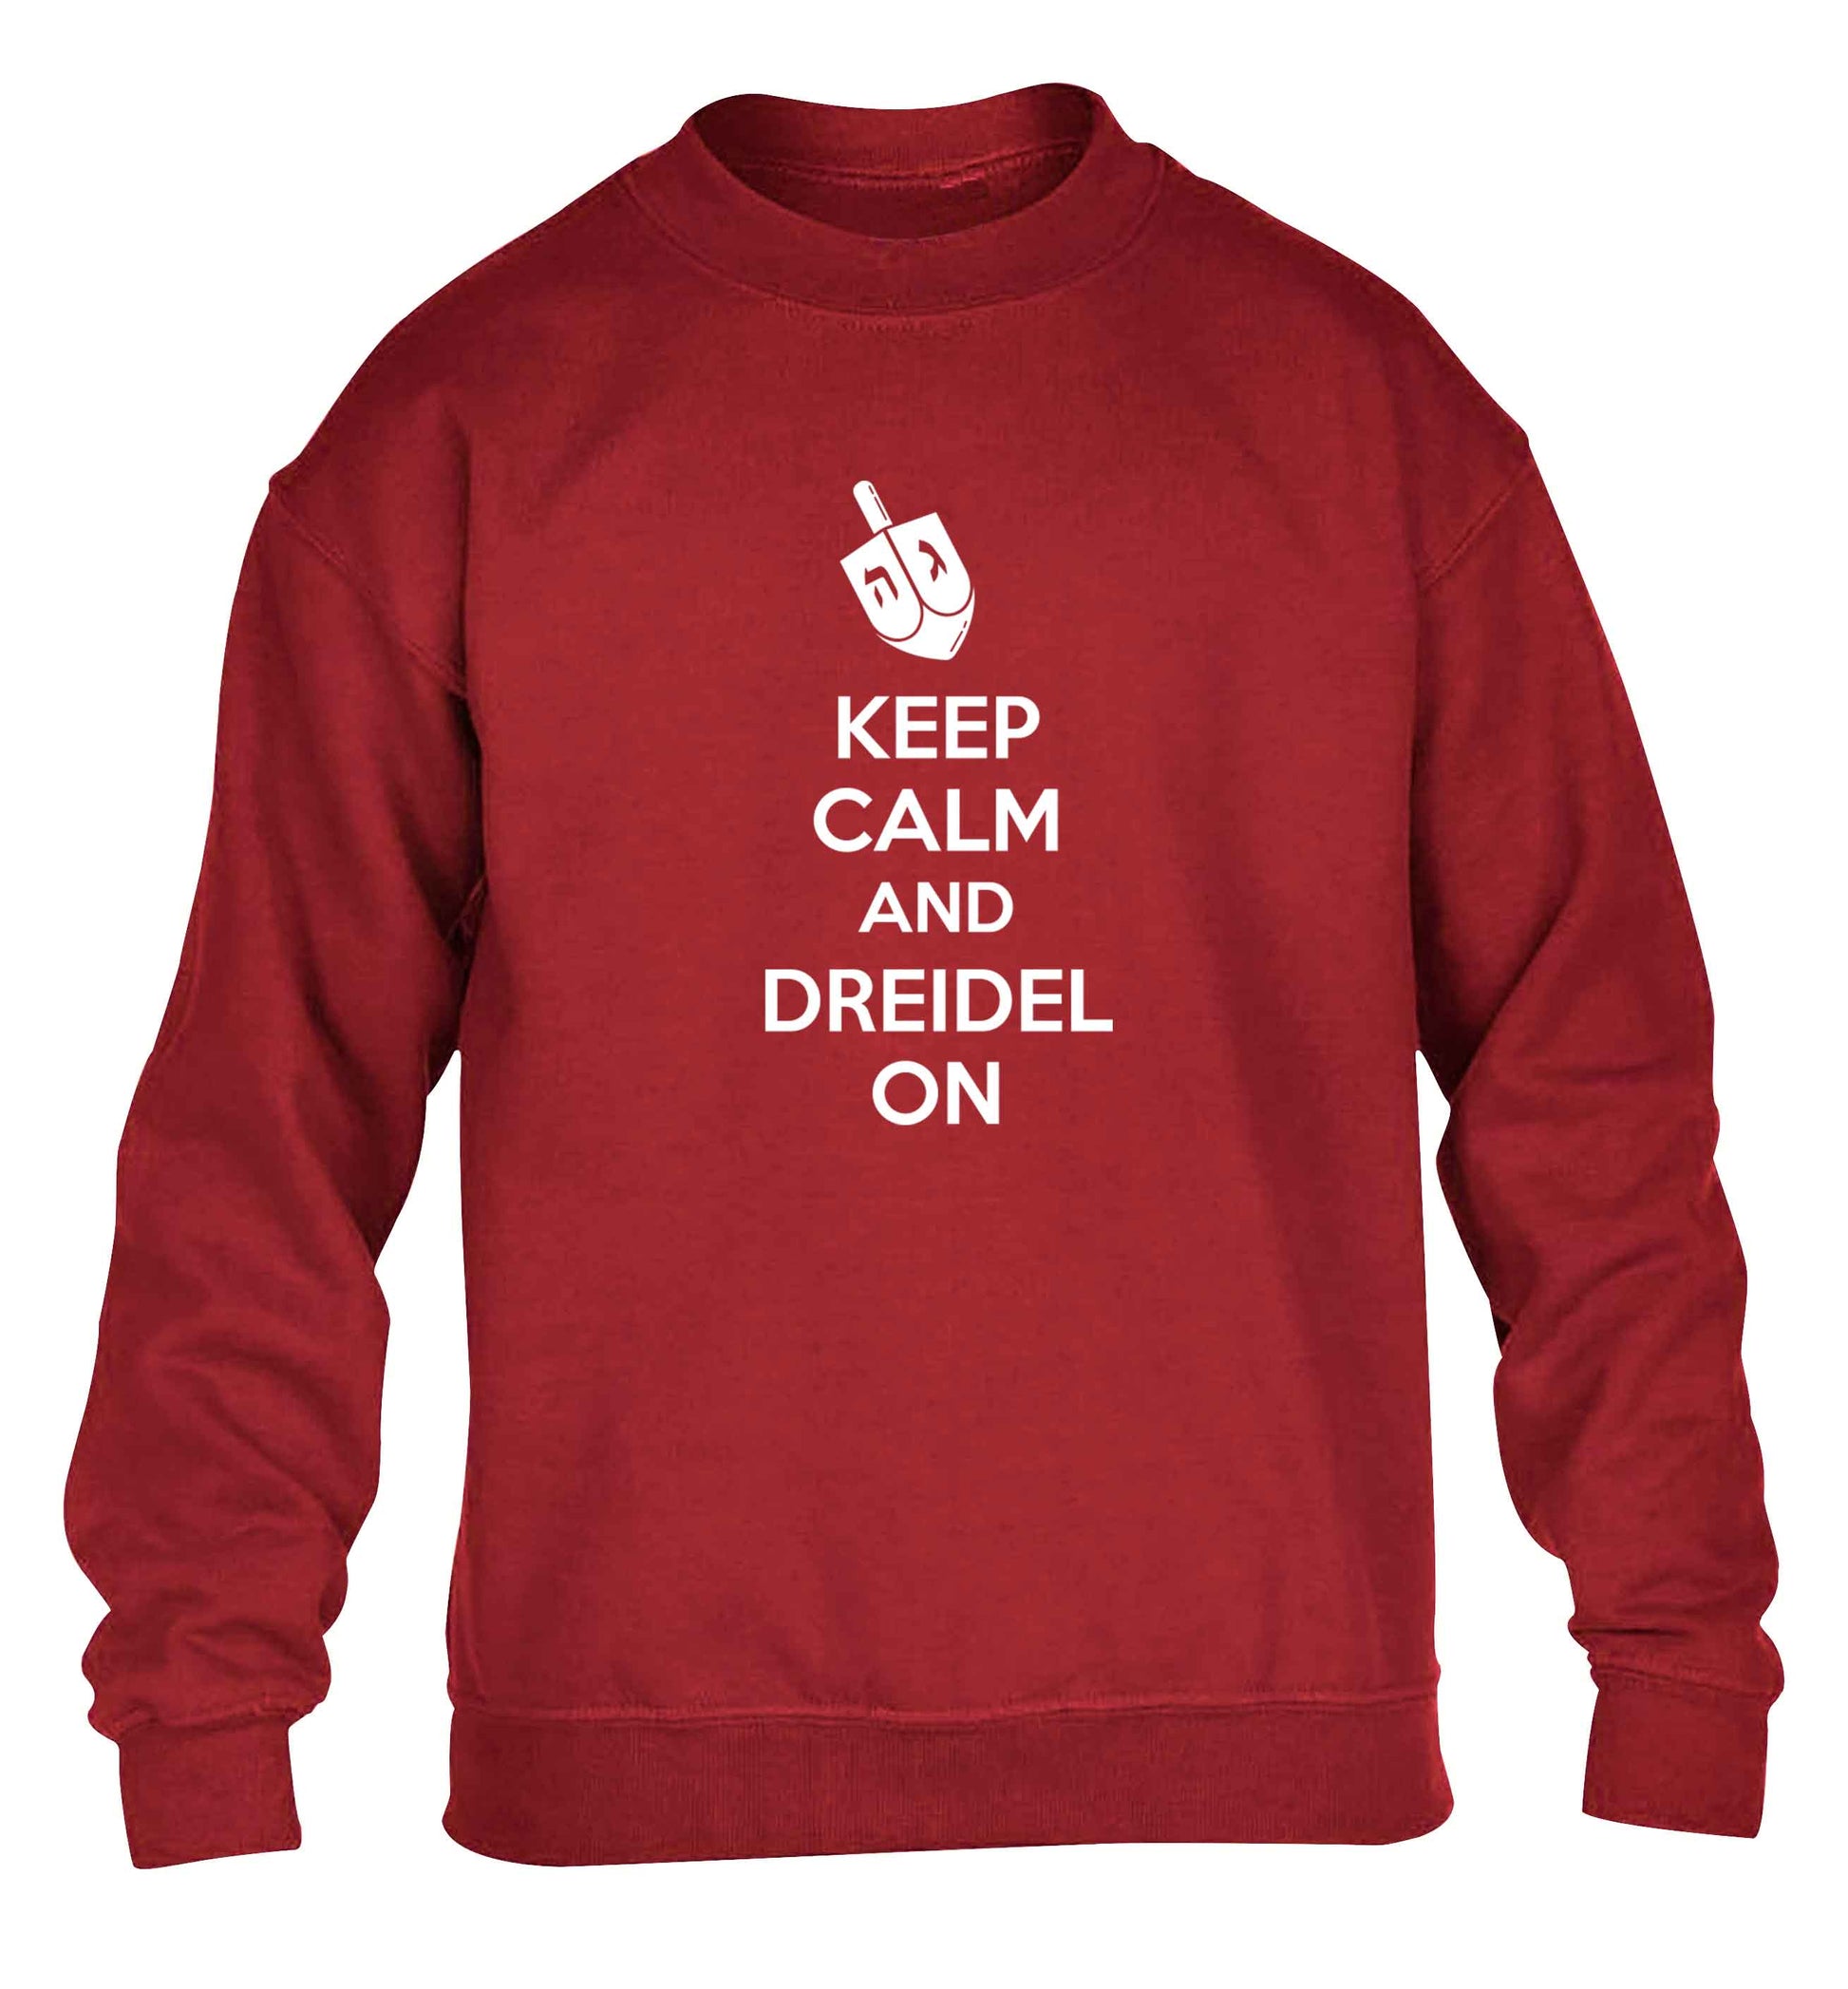 Keep calm and dreidel on children's grey sweater 12-13 Years